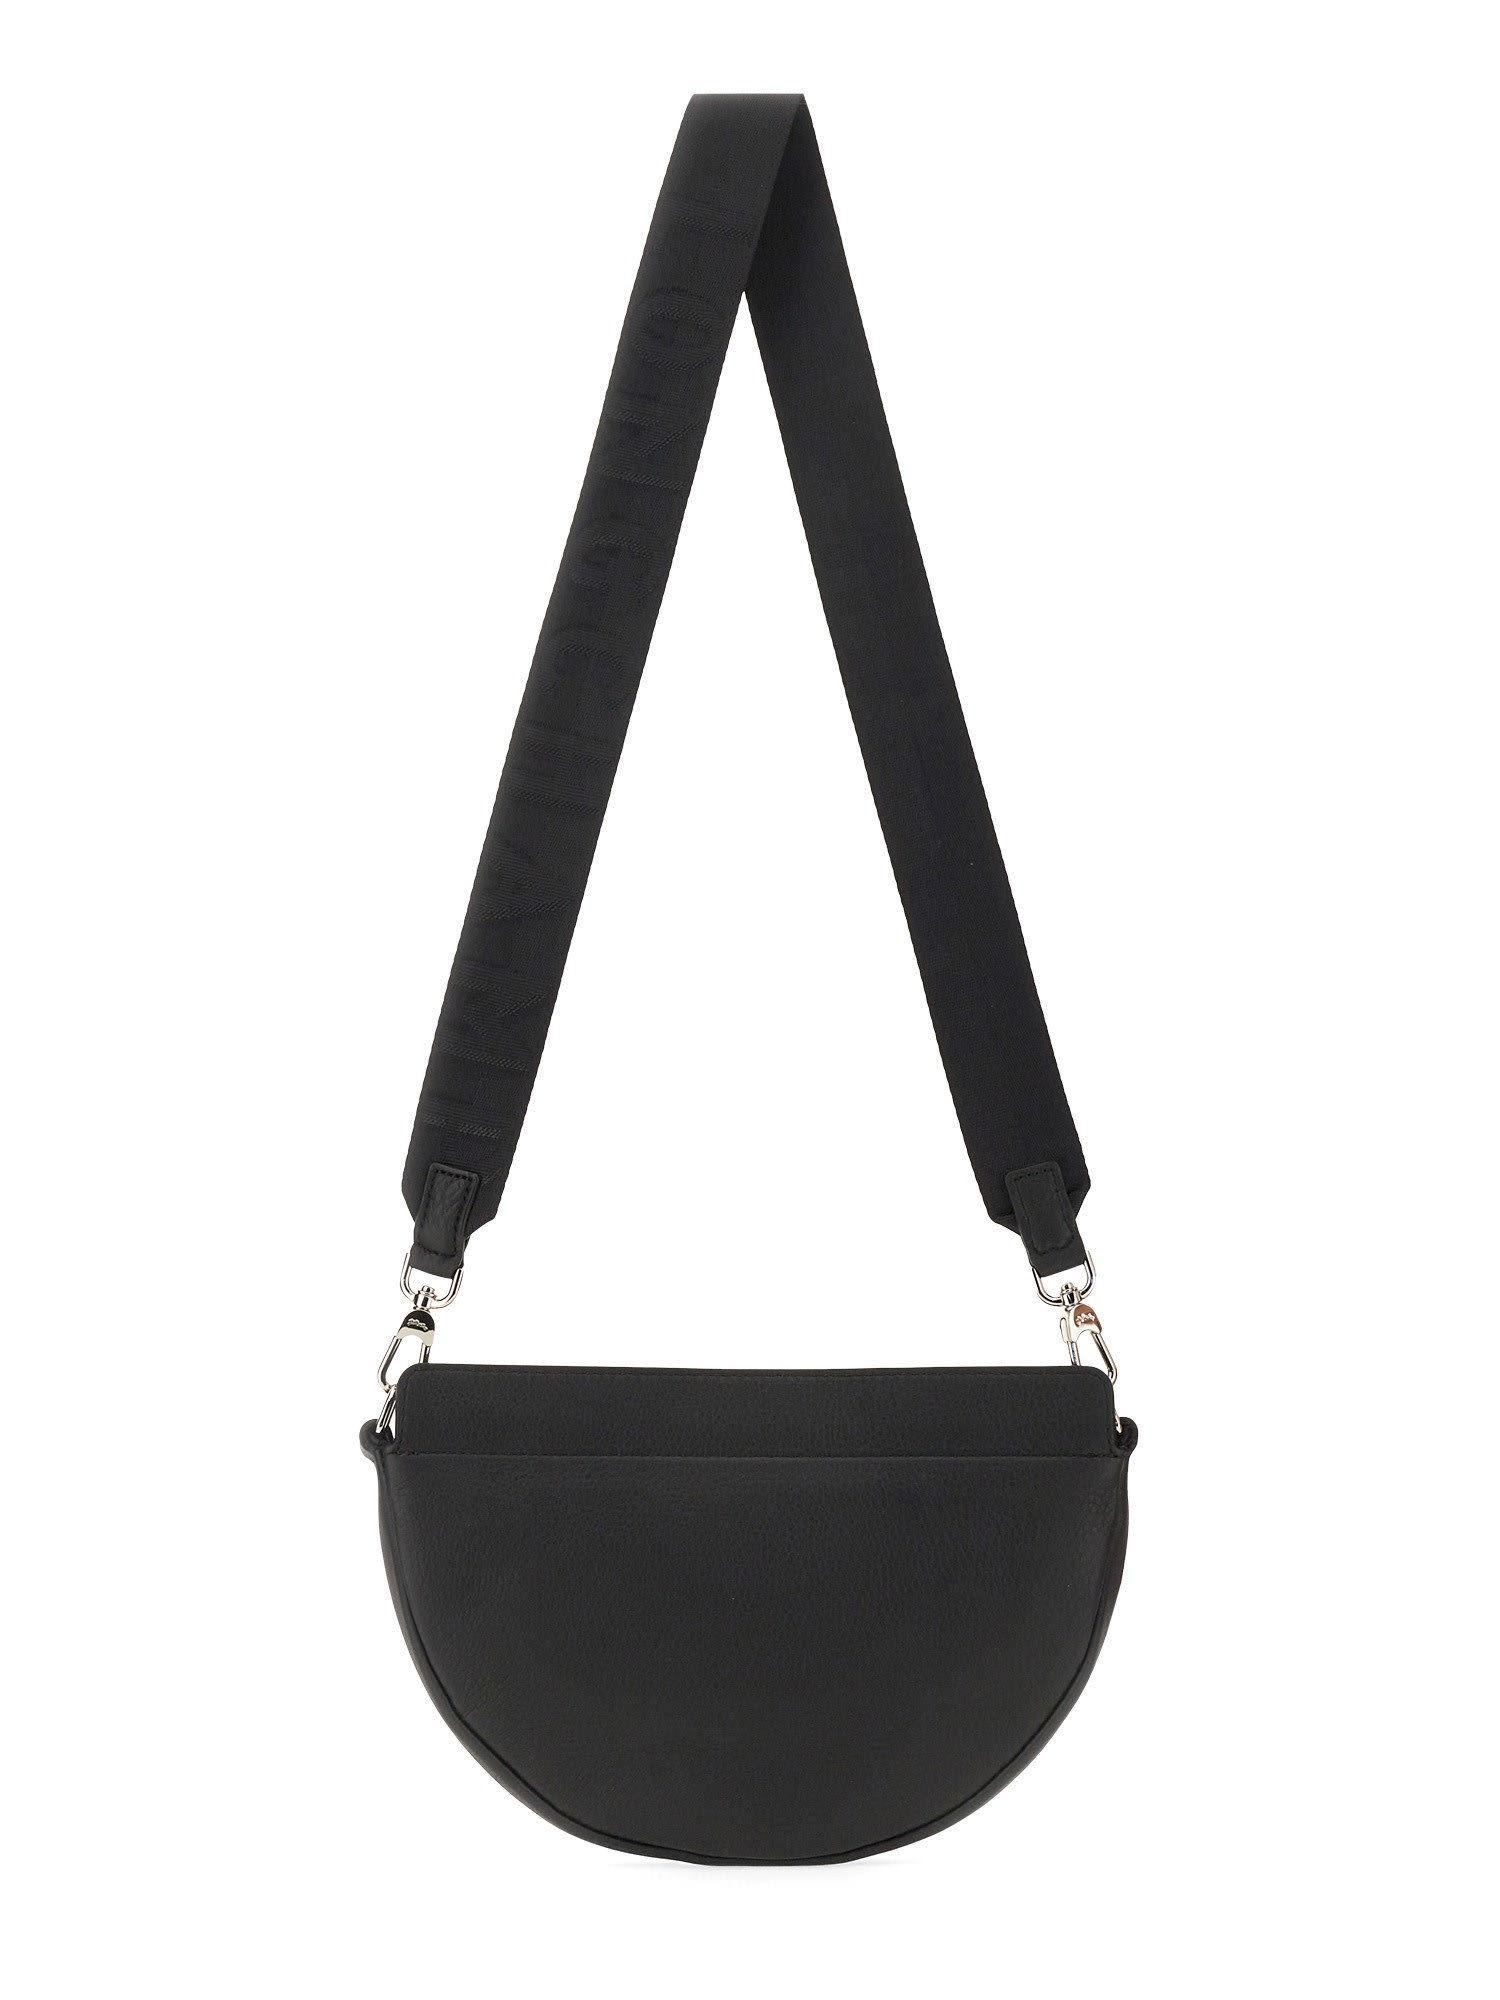 Longchamp Le Pliage Neo Xs Handbag With Strap In Raspberry